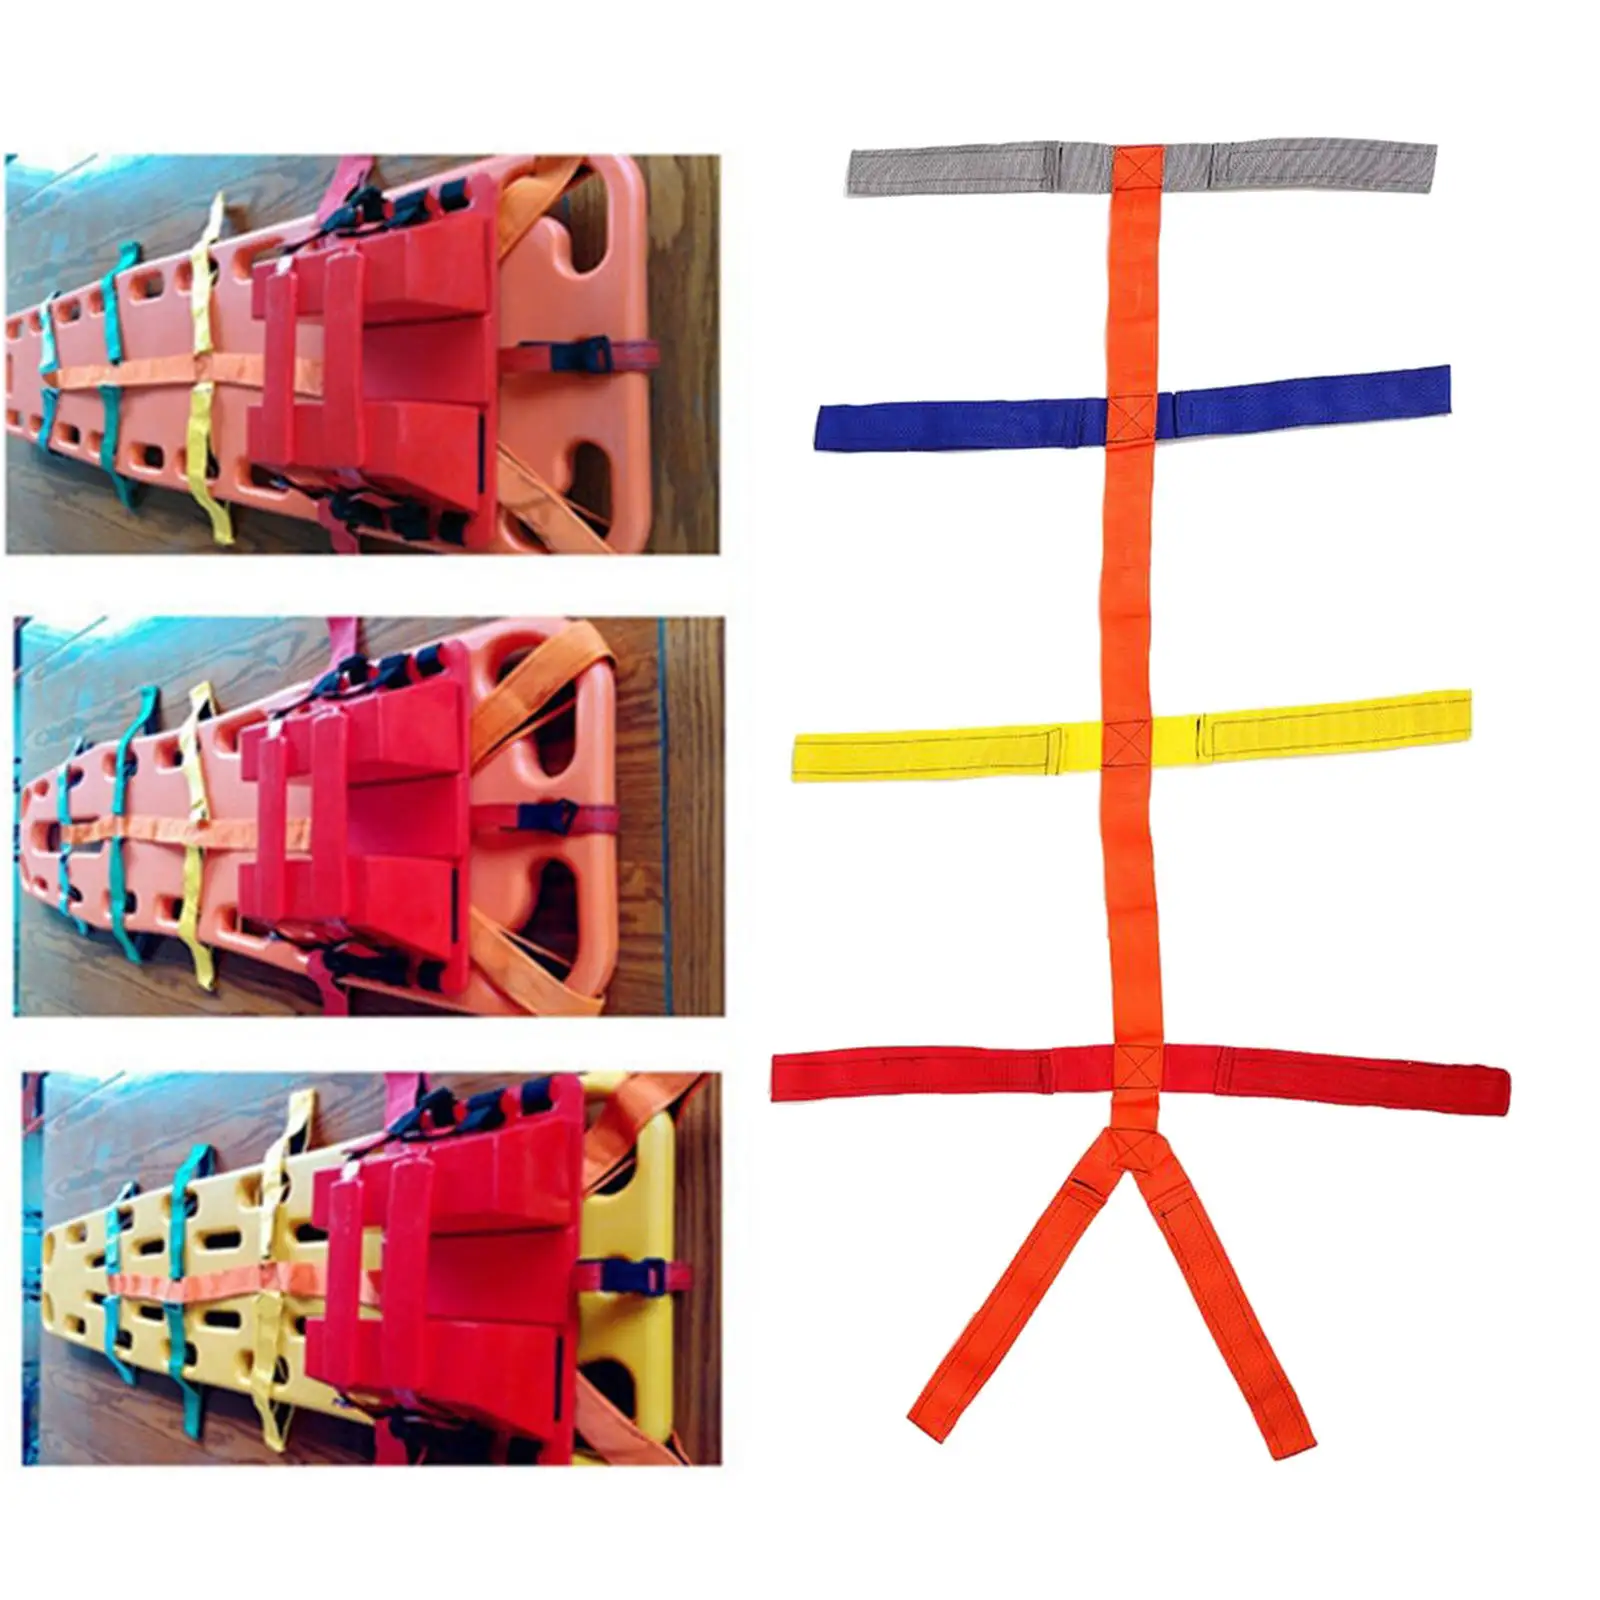 Spider Strap Spinal Belt Stretcher Color Coded Spinal Fixation EMS Band Reflective Backboard Support Personal for Spine Board